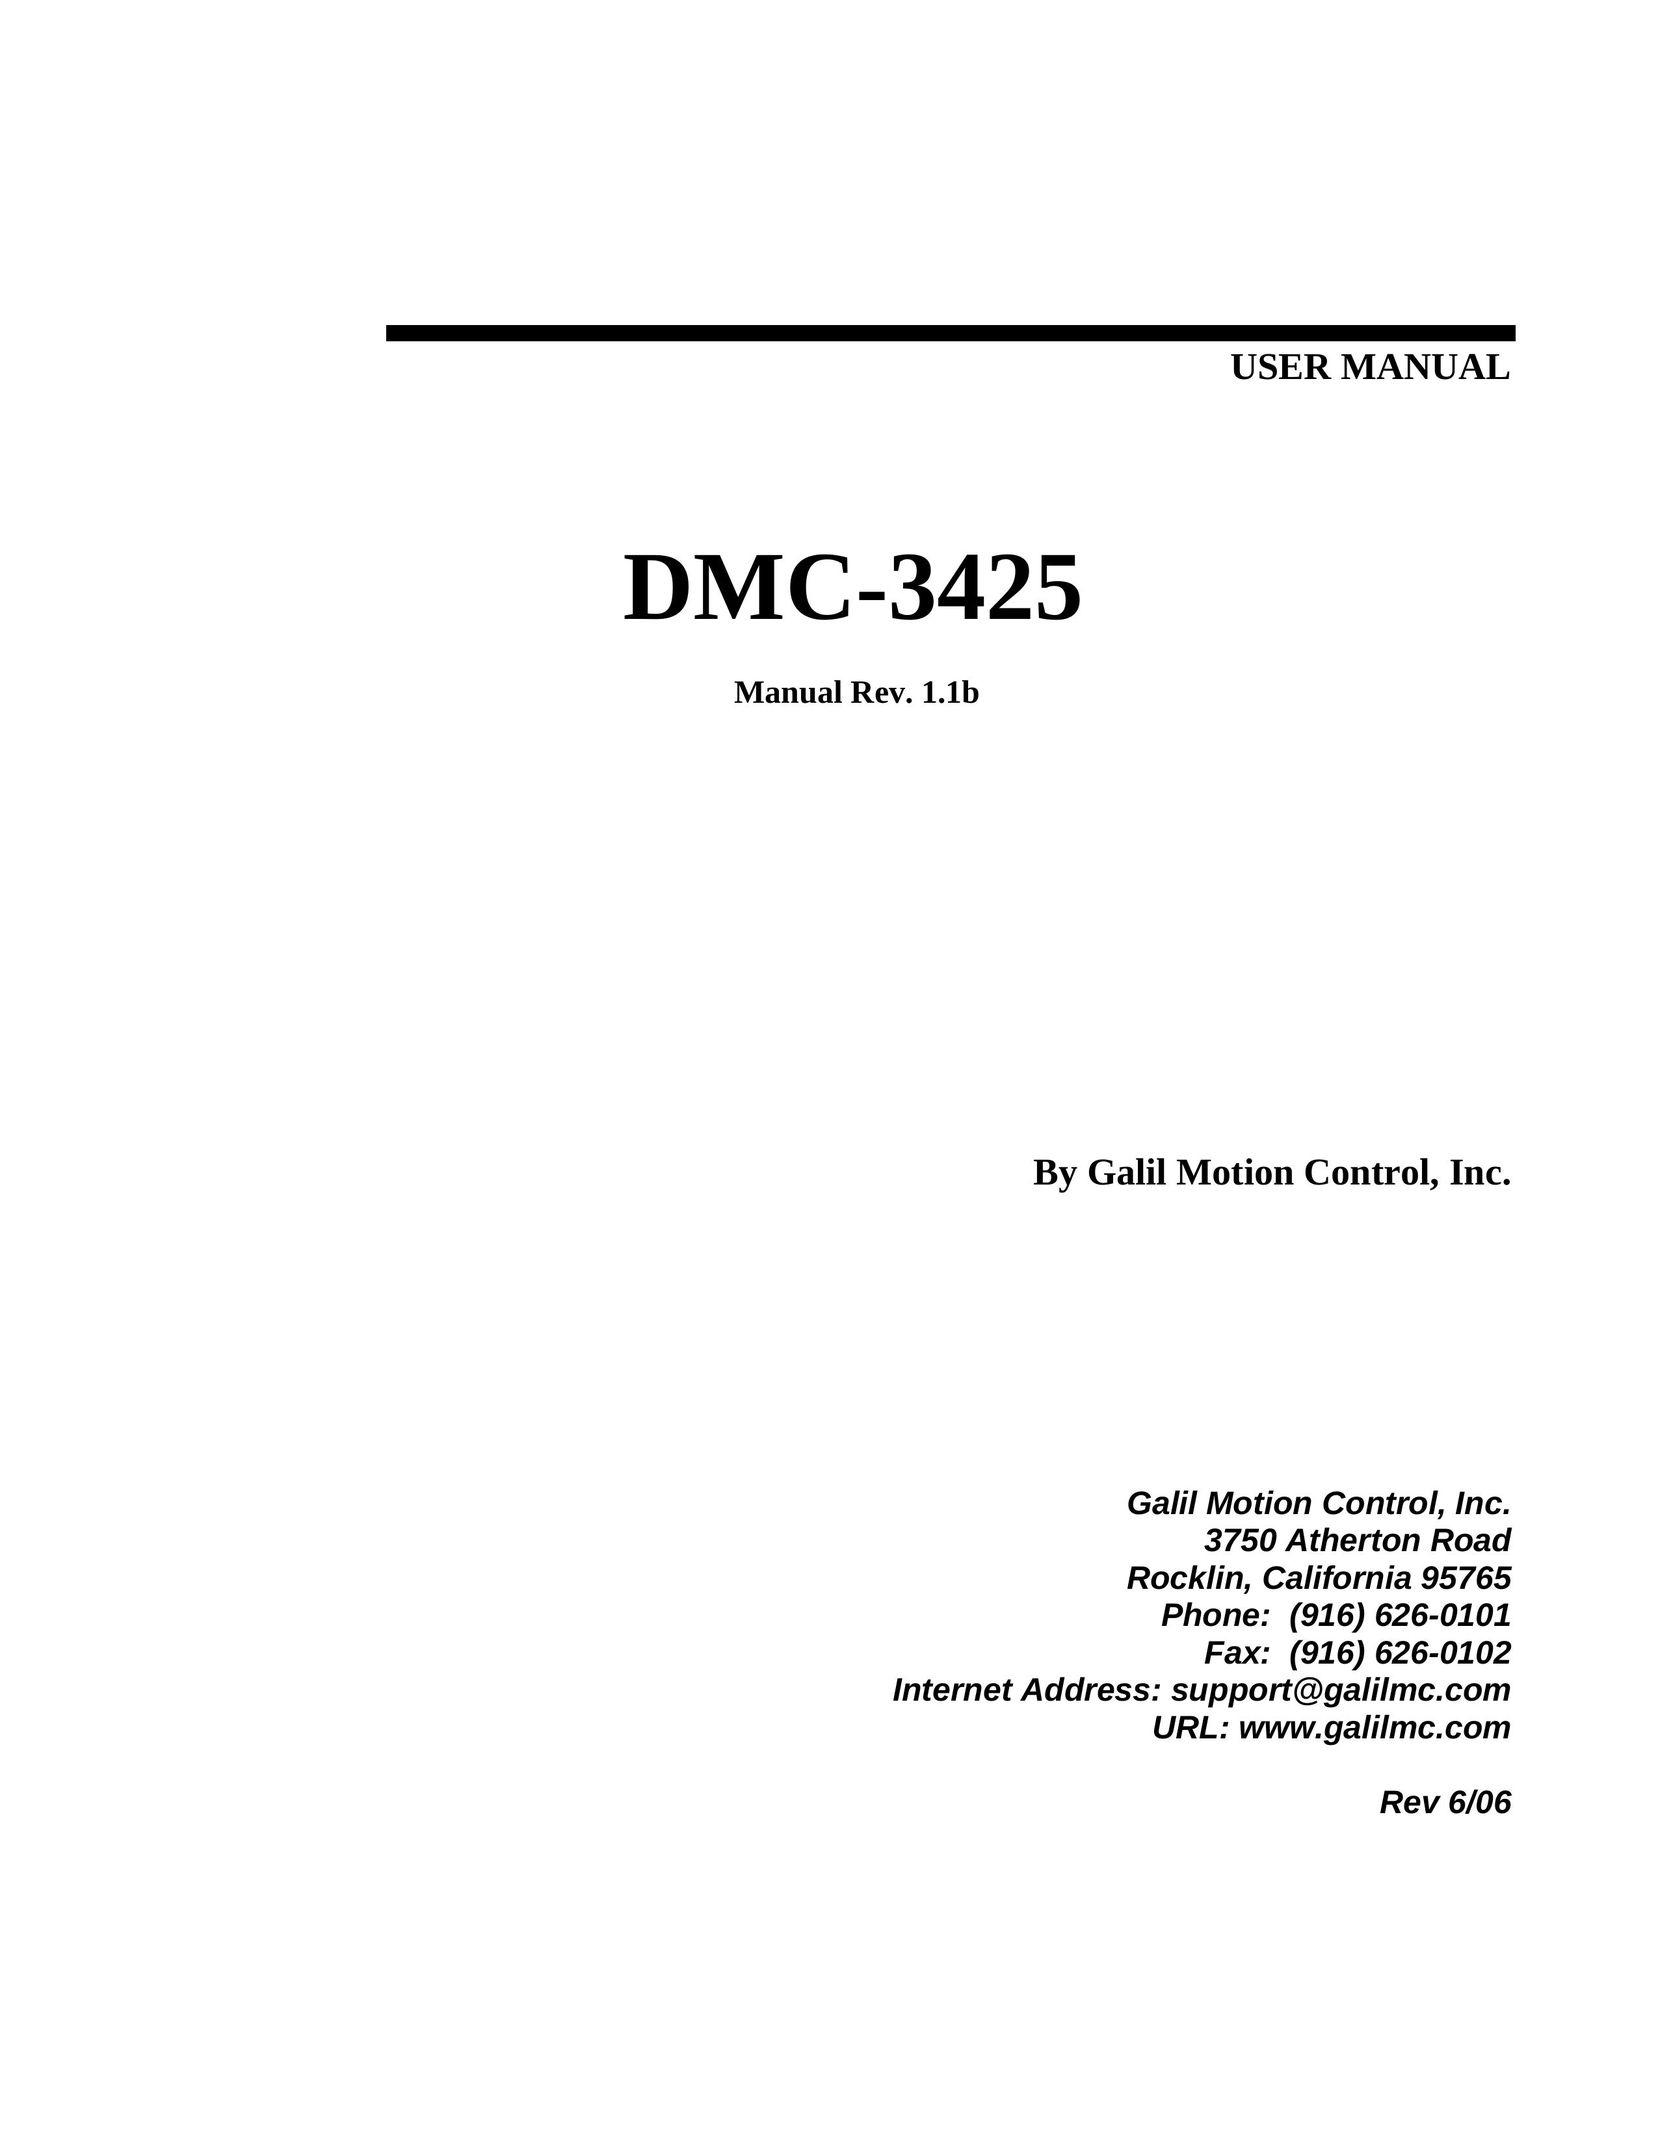 Galil DMC-3425 Home Security System User Manual